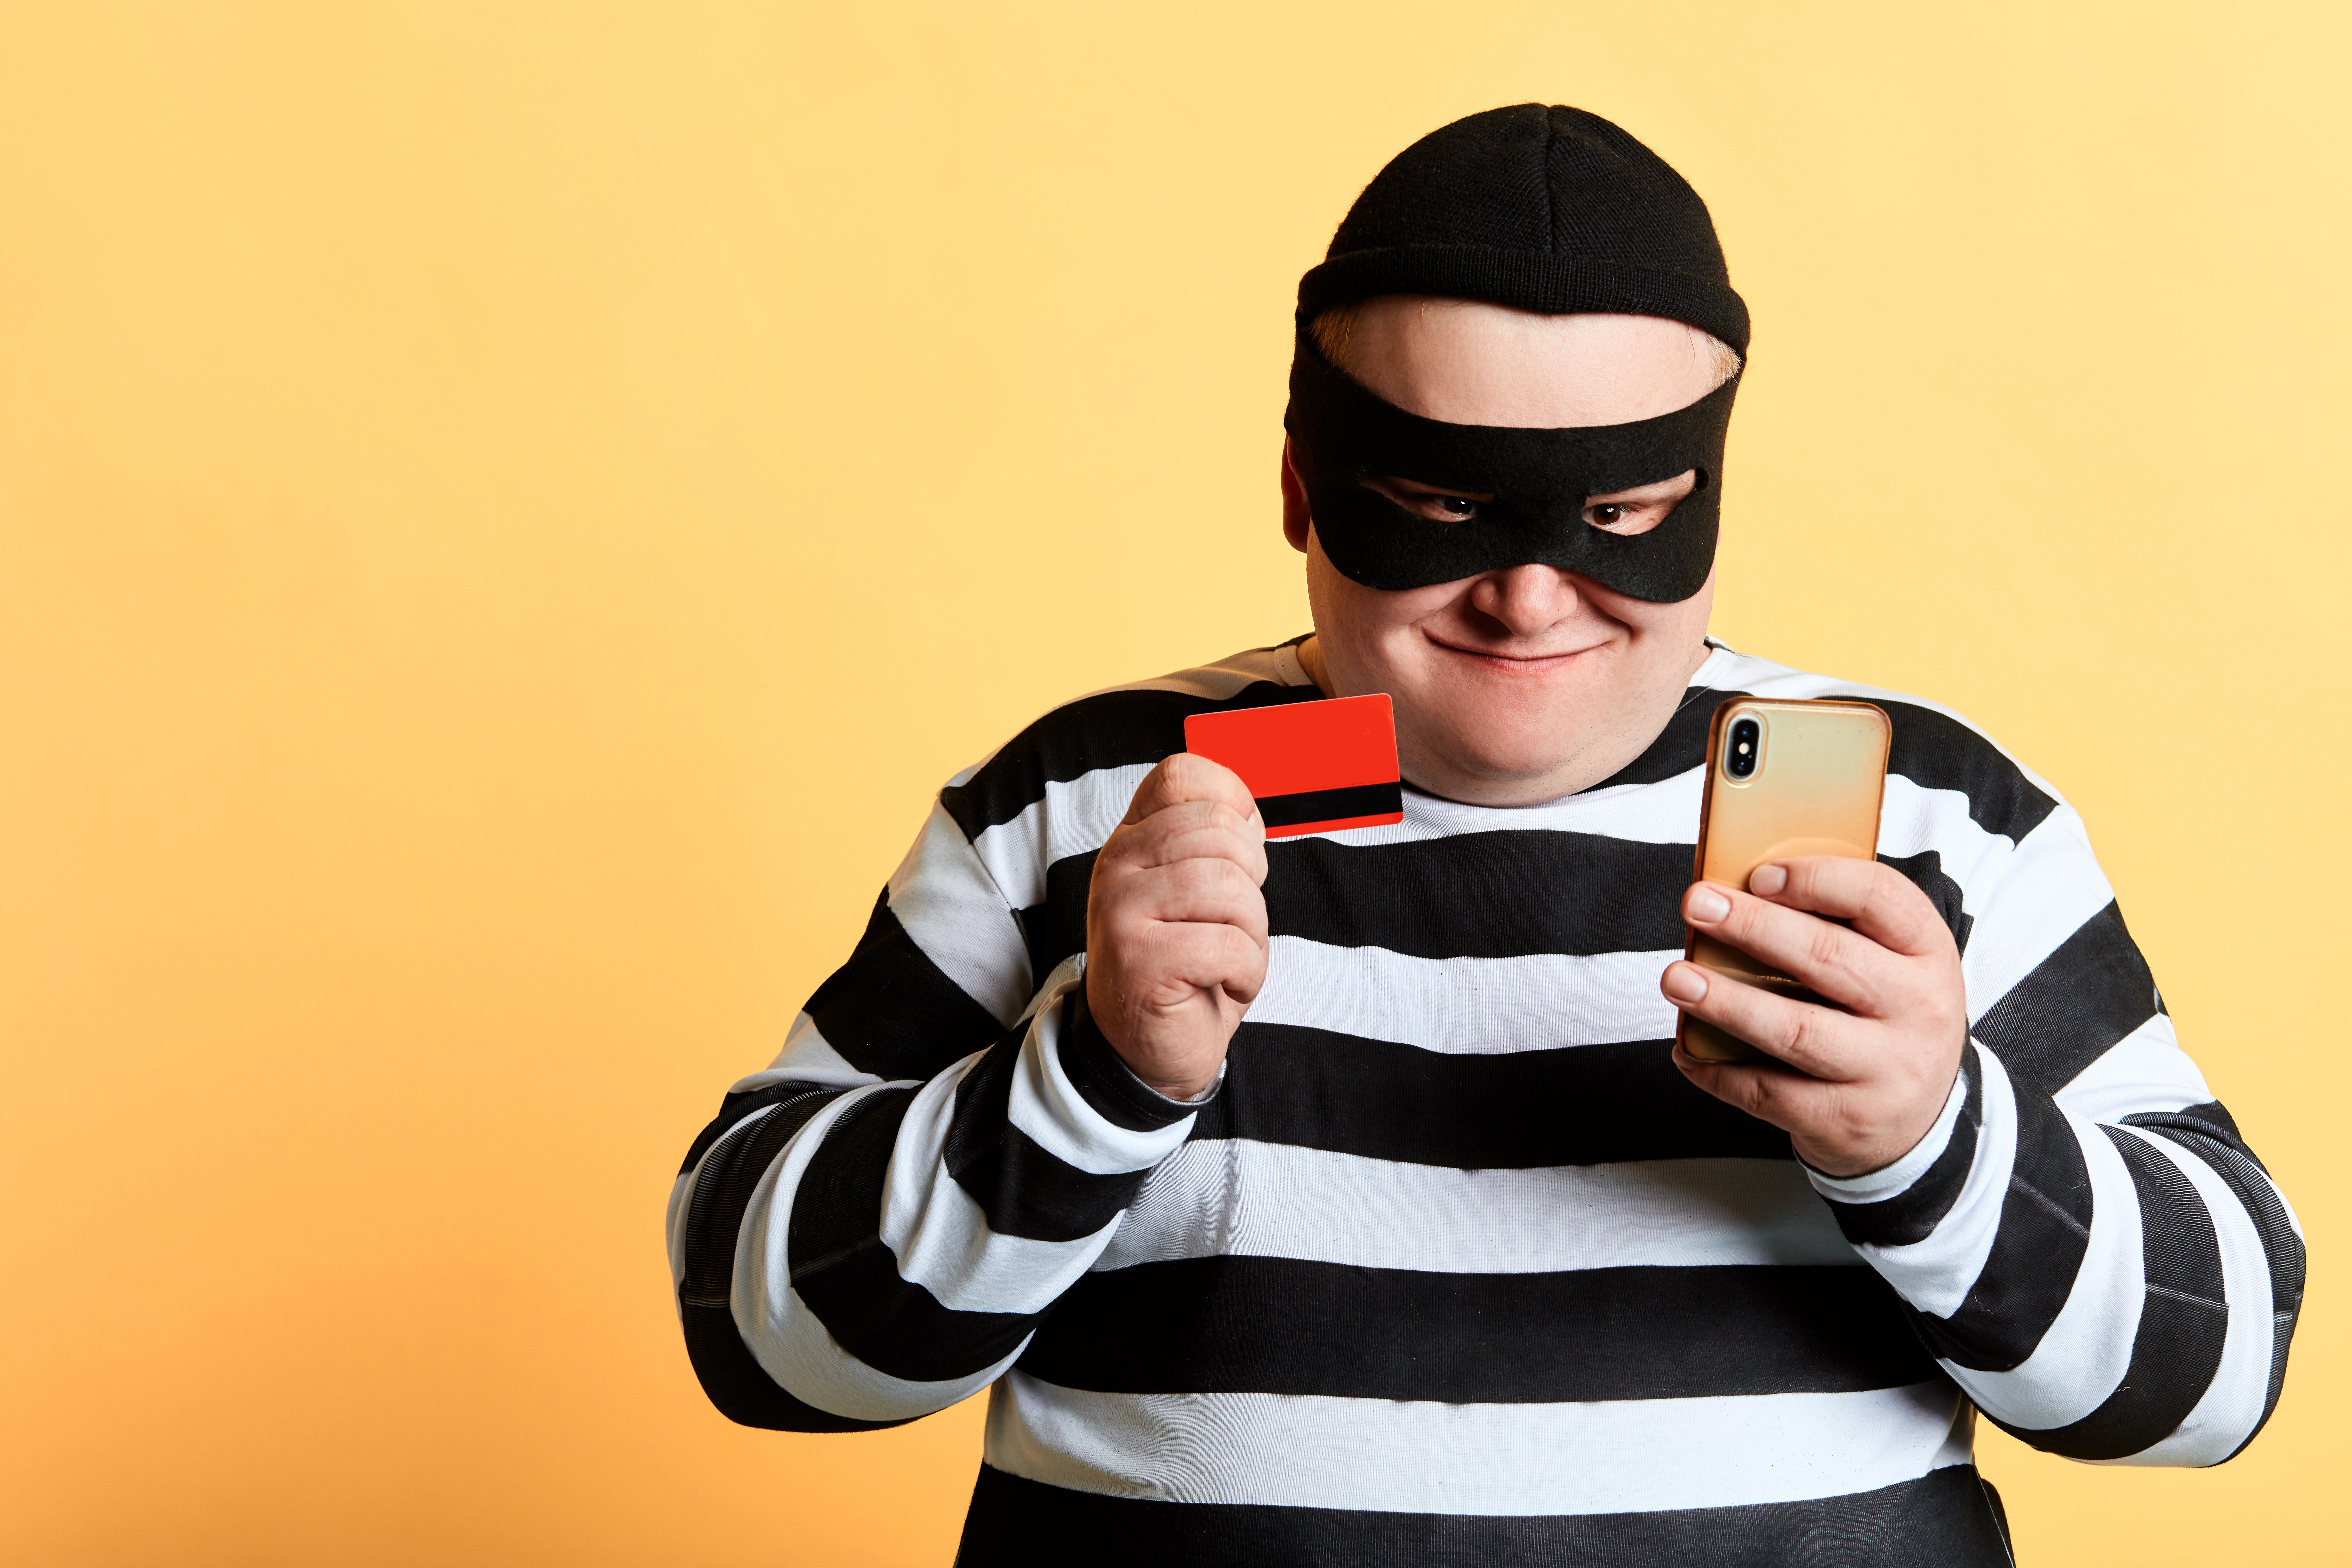 criminal uses phone for ebt scam